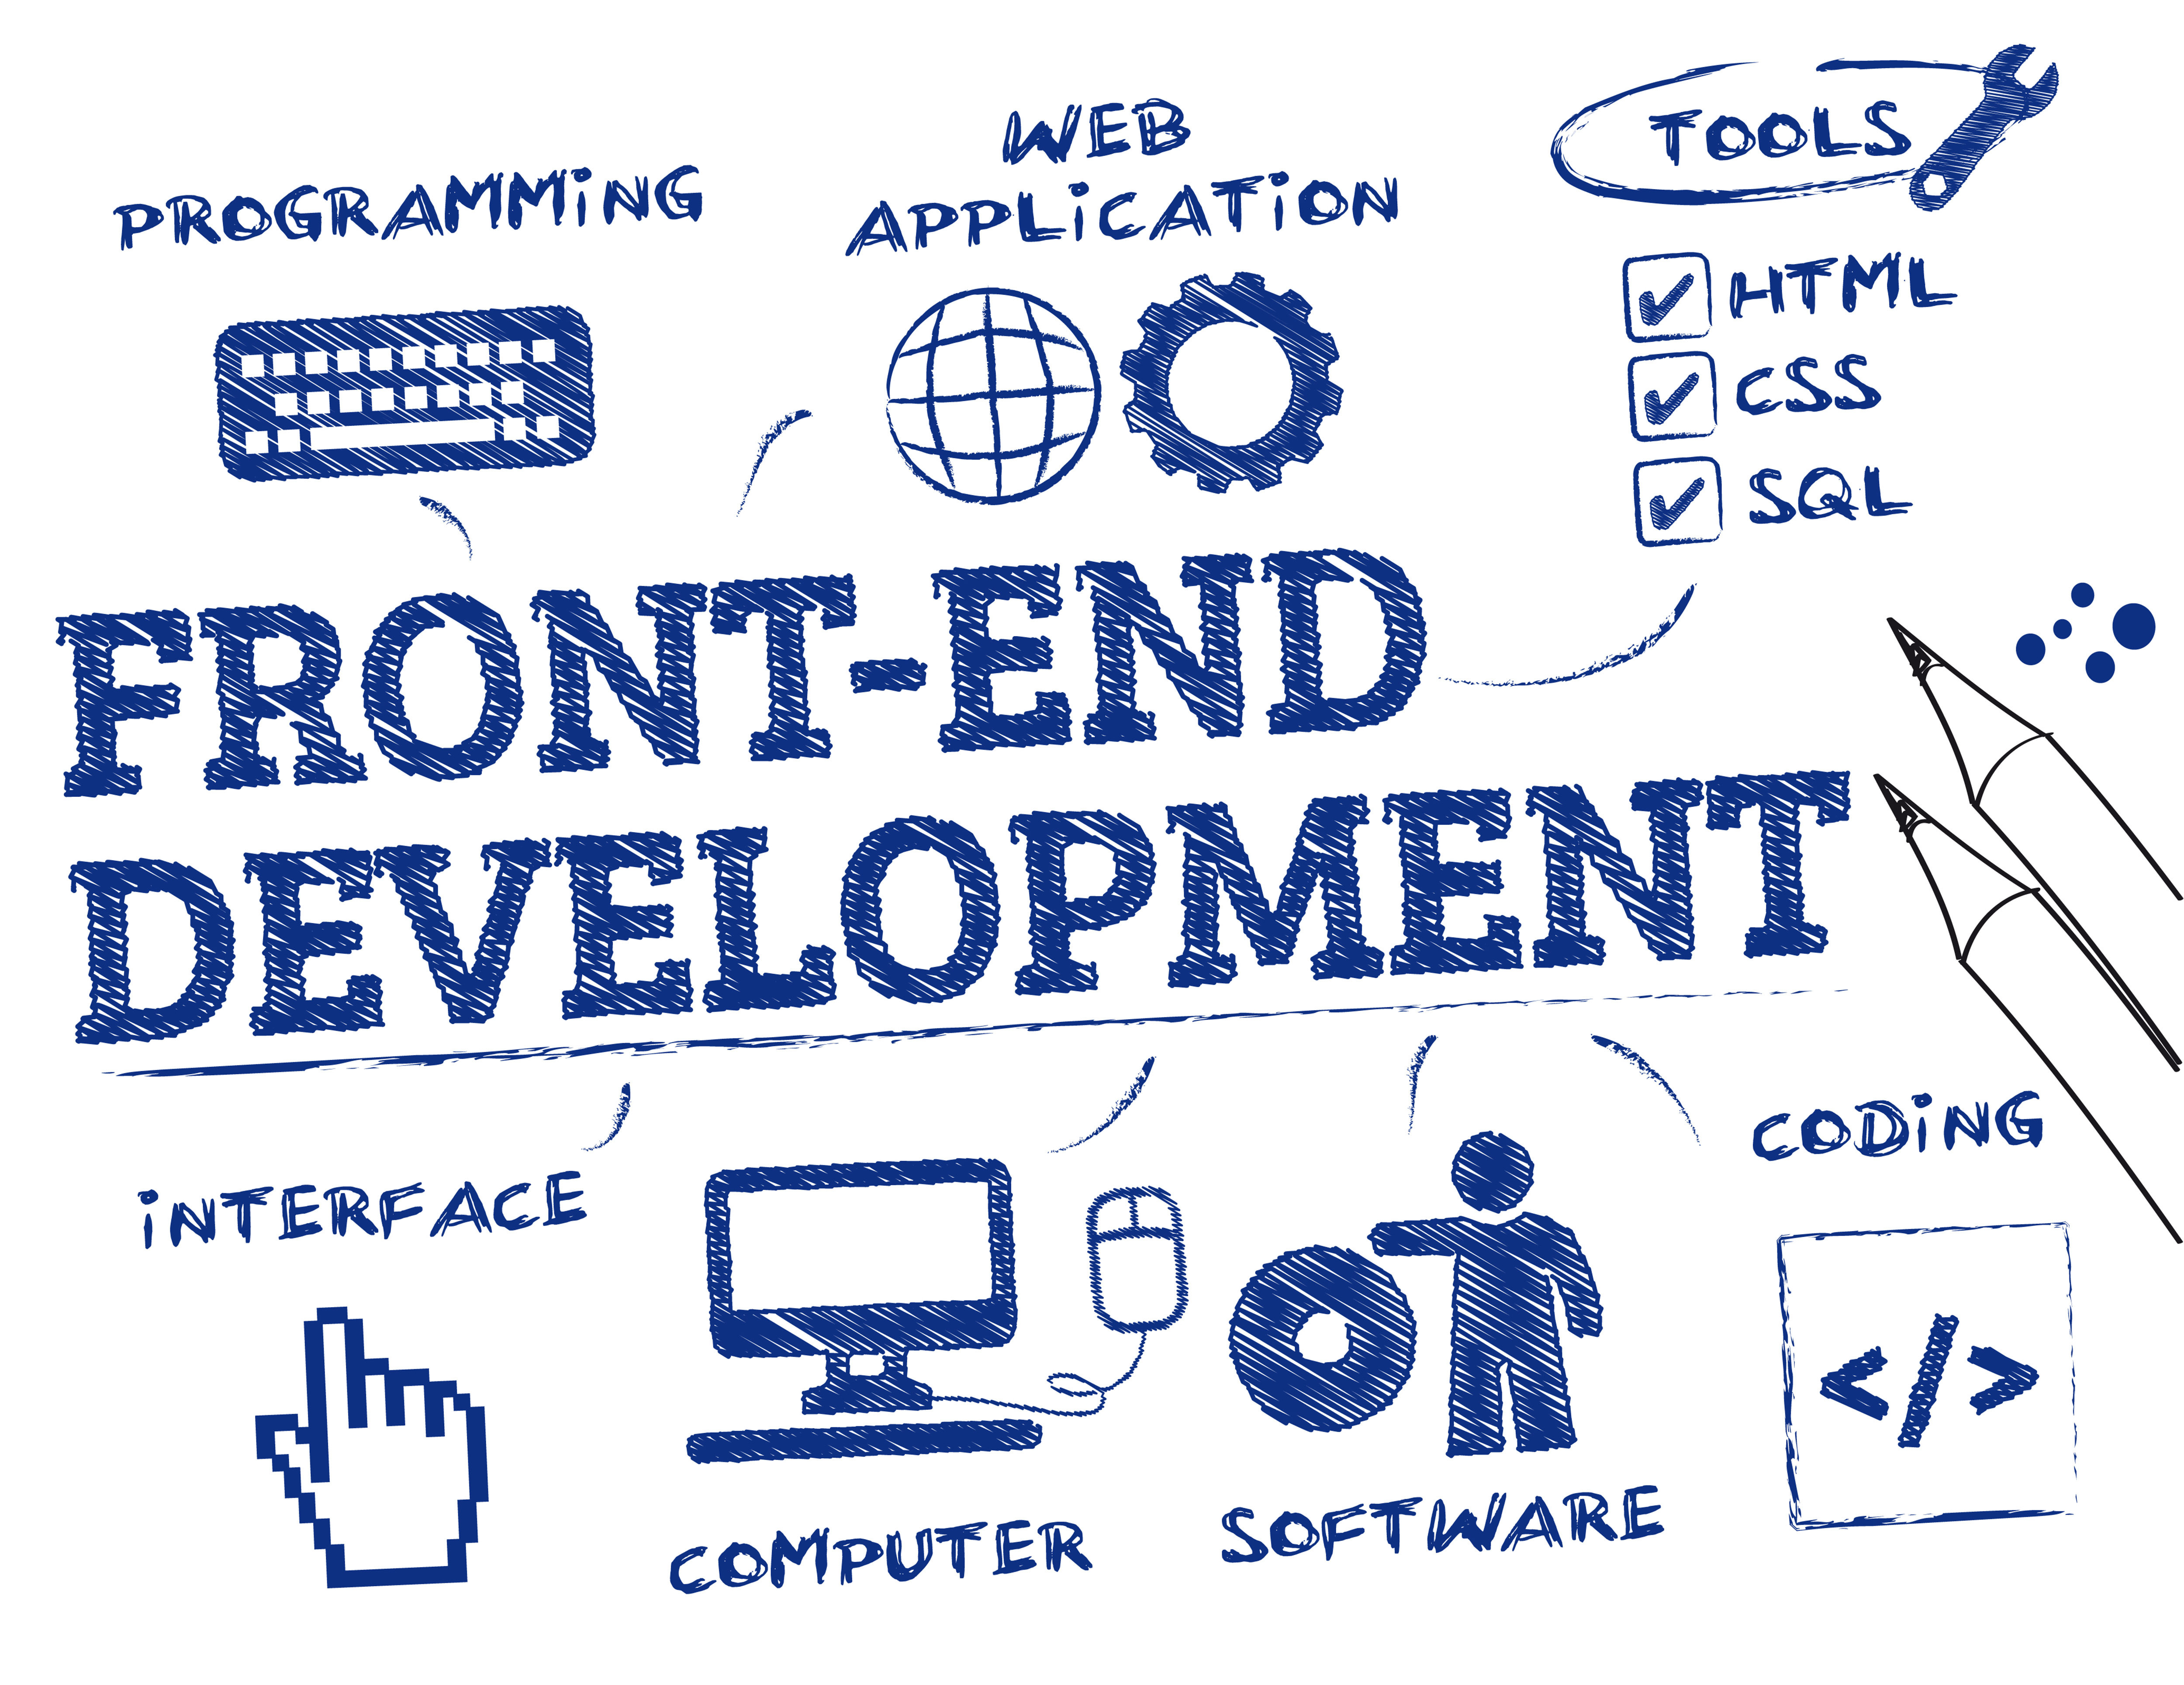 Front-End Developer Skills & Characteristics